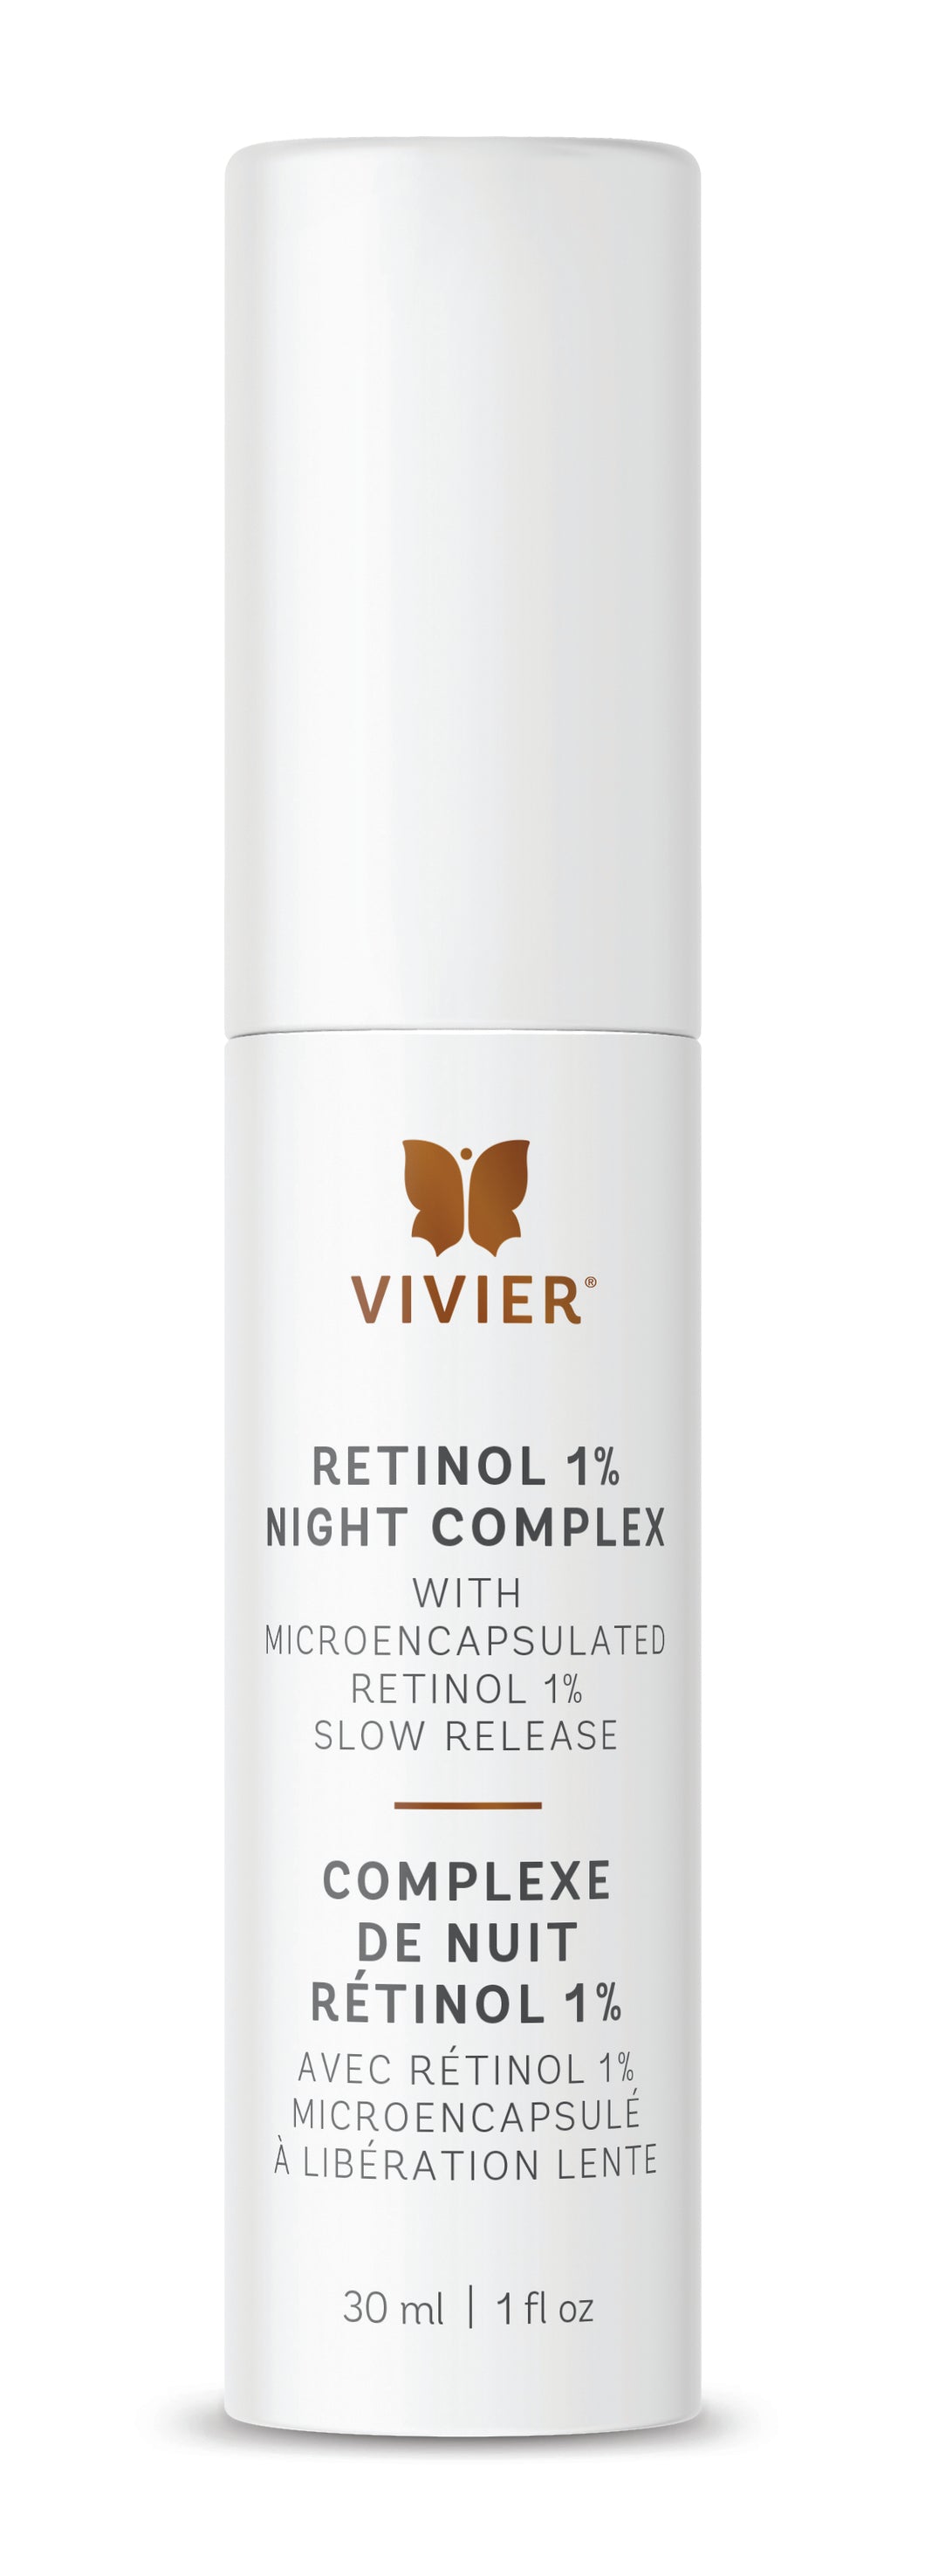 Retinol 1% Night Complex